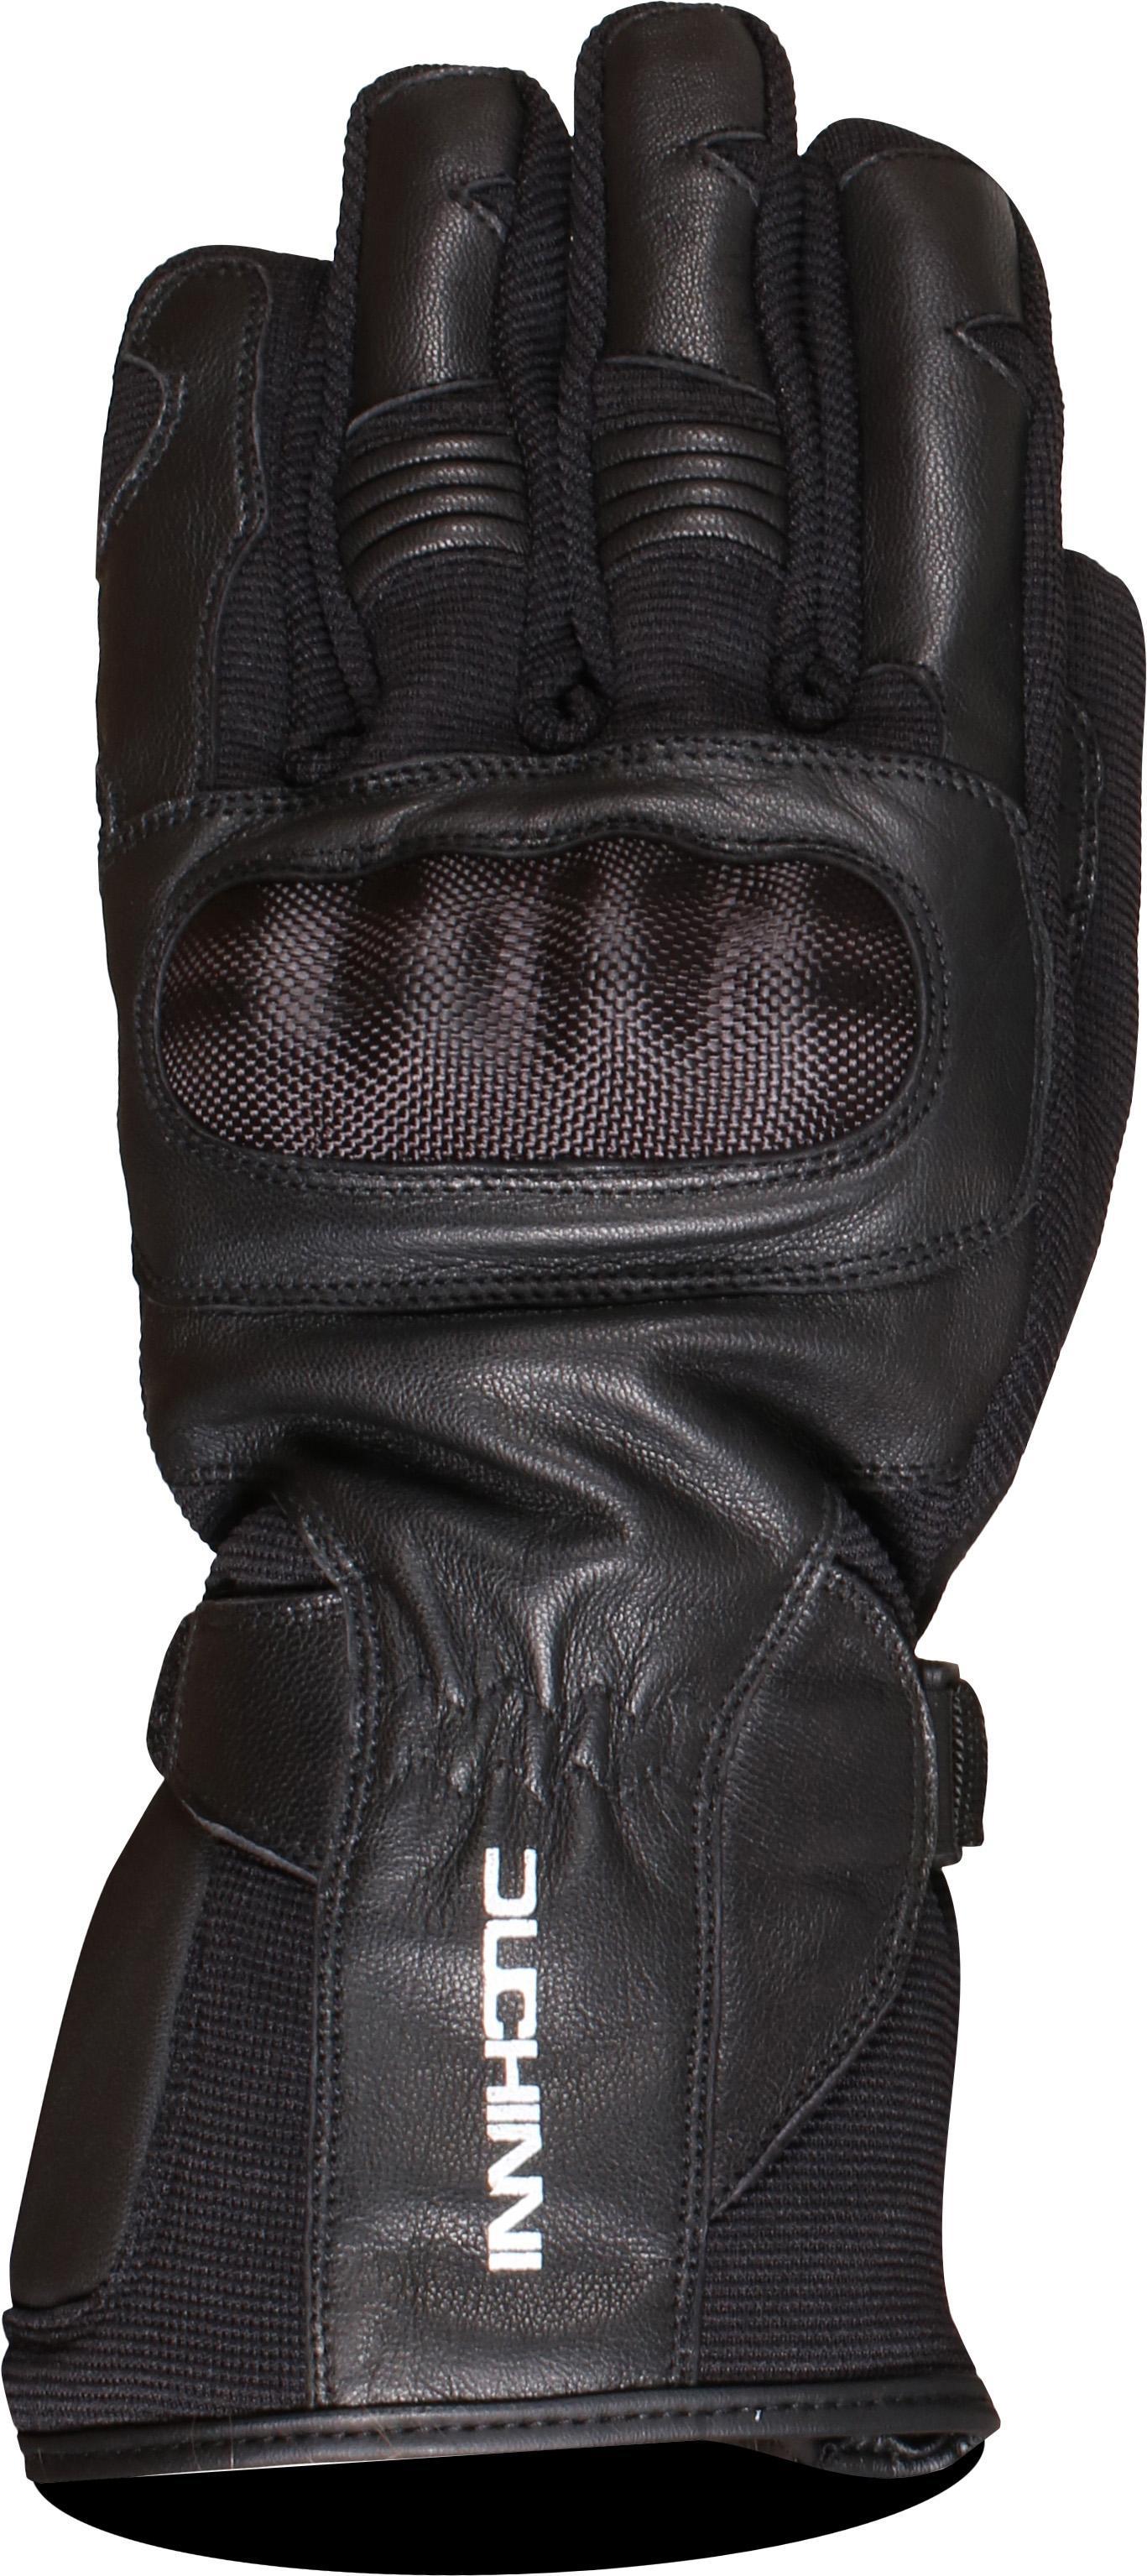 Duchinni Shadow Motorcycle Gloves - Black, 2Xl